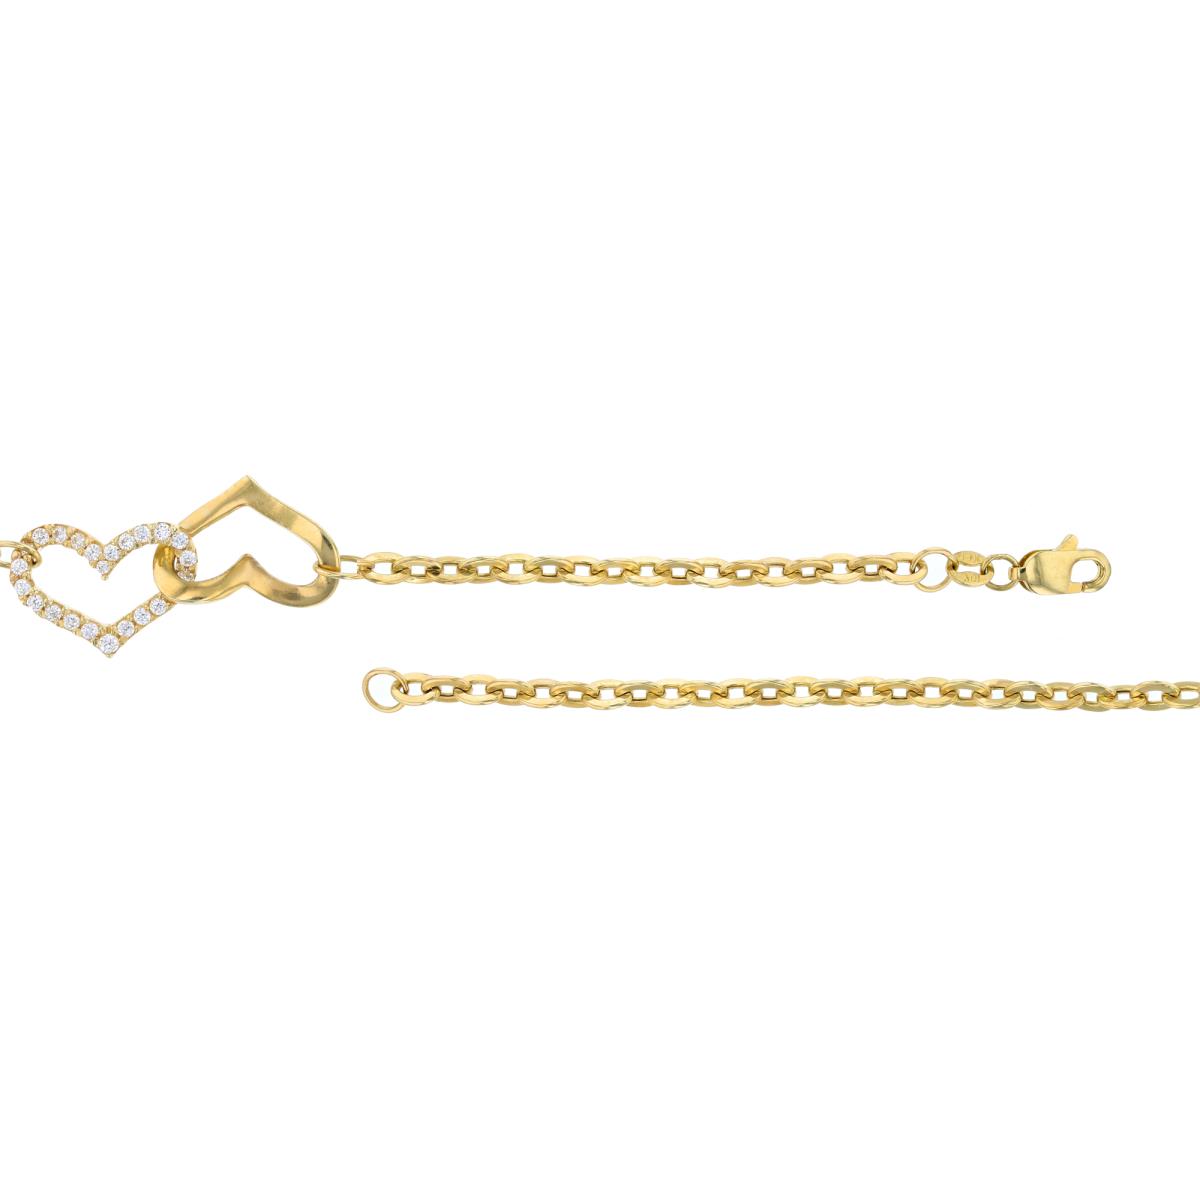 14K Yellow Gold Double Heart 7.25" Bracelet with Cubic Zirconia